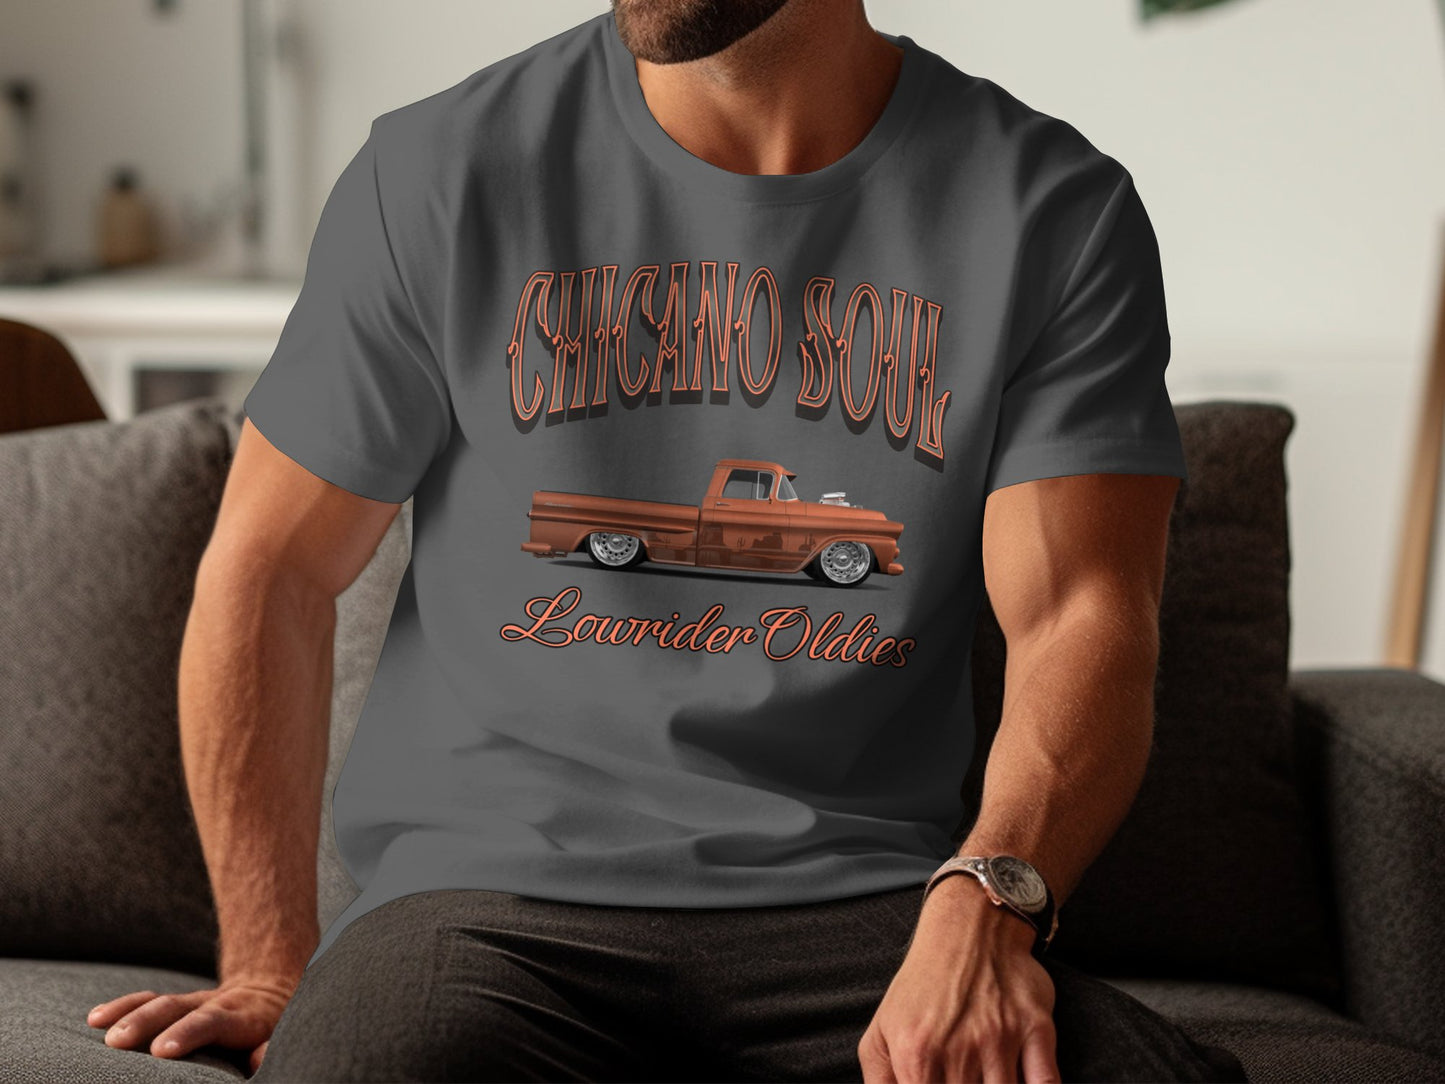 Chicano Soul Lowrider Oldies Vintage Truck Graphic Tee, Classic Car T-Shirt, Retro Style Apparel - Mardonyx XS / Asphalt